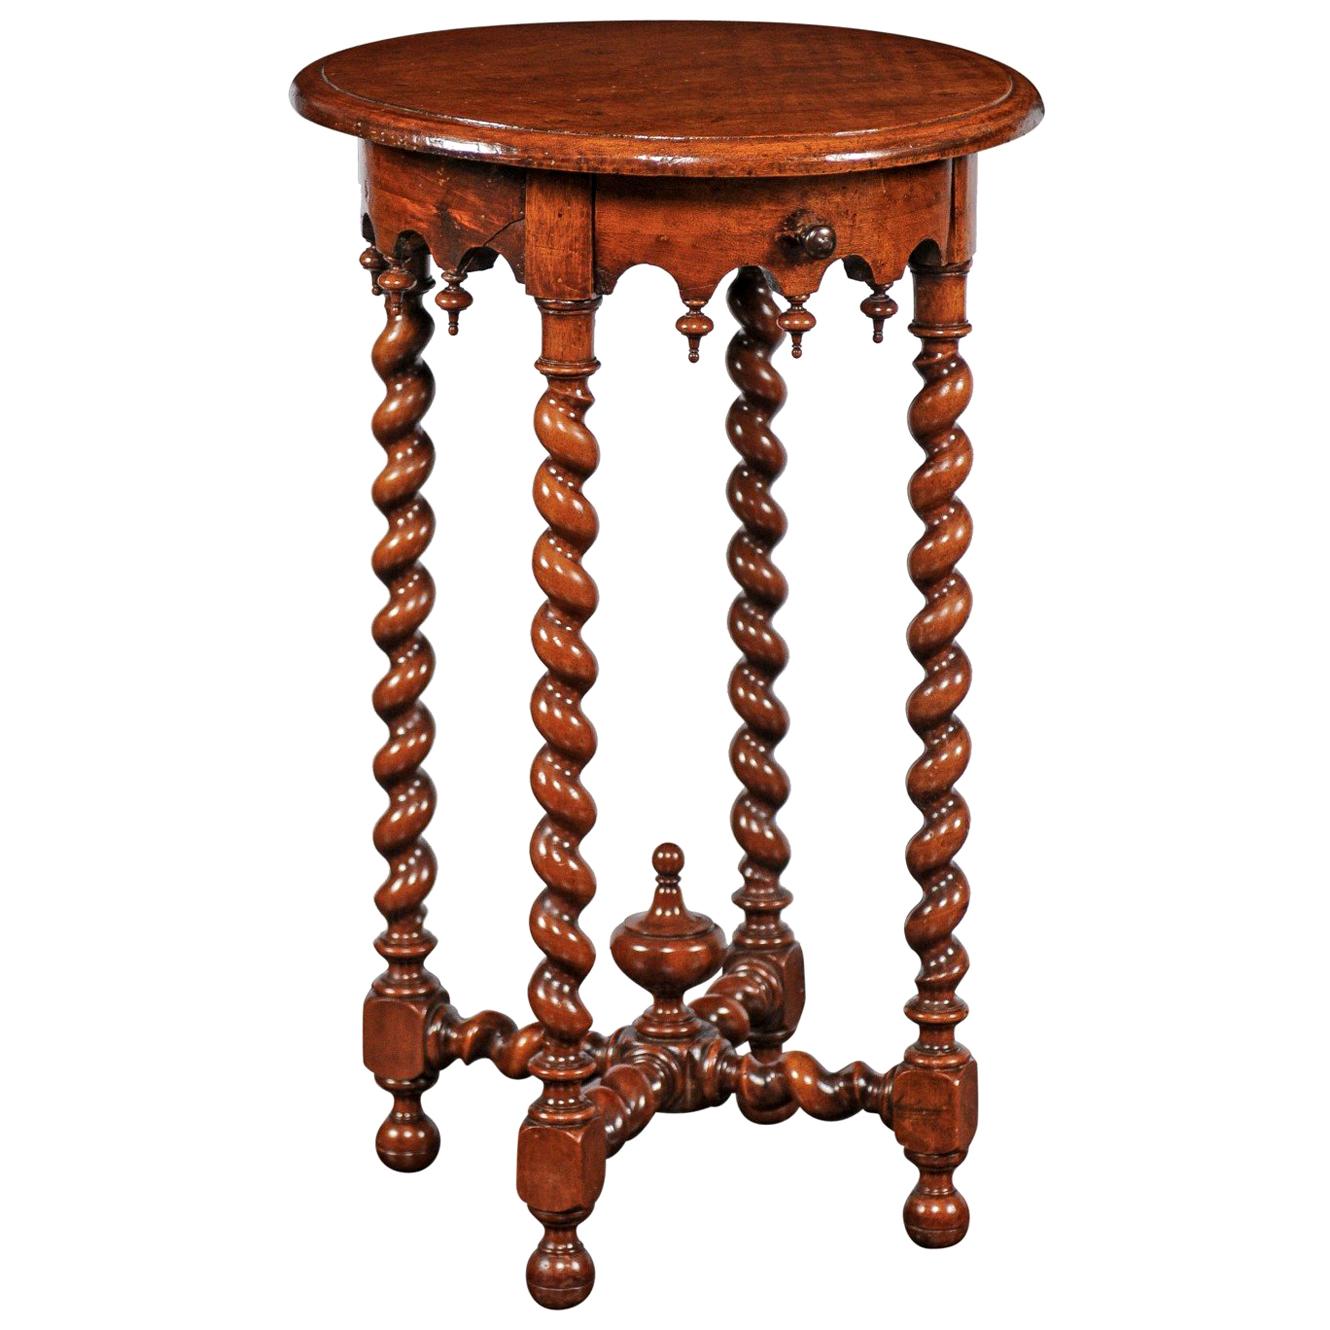 French 1870s Louis XIII Style Walnut Guéridon Side Table with Barley Twist Legs